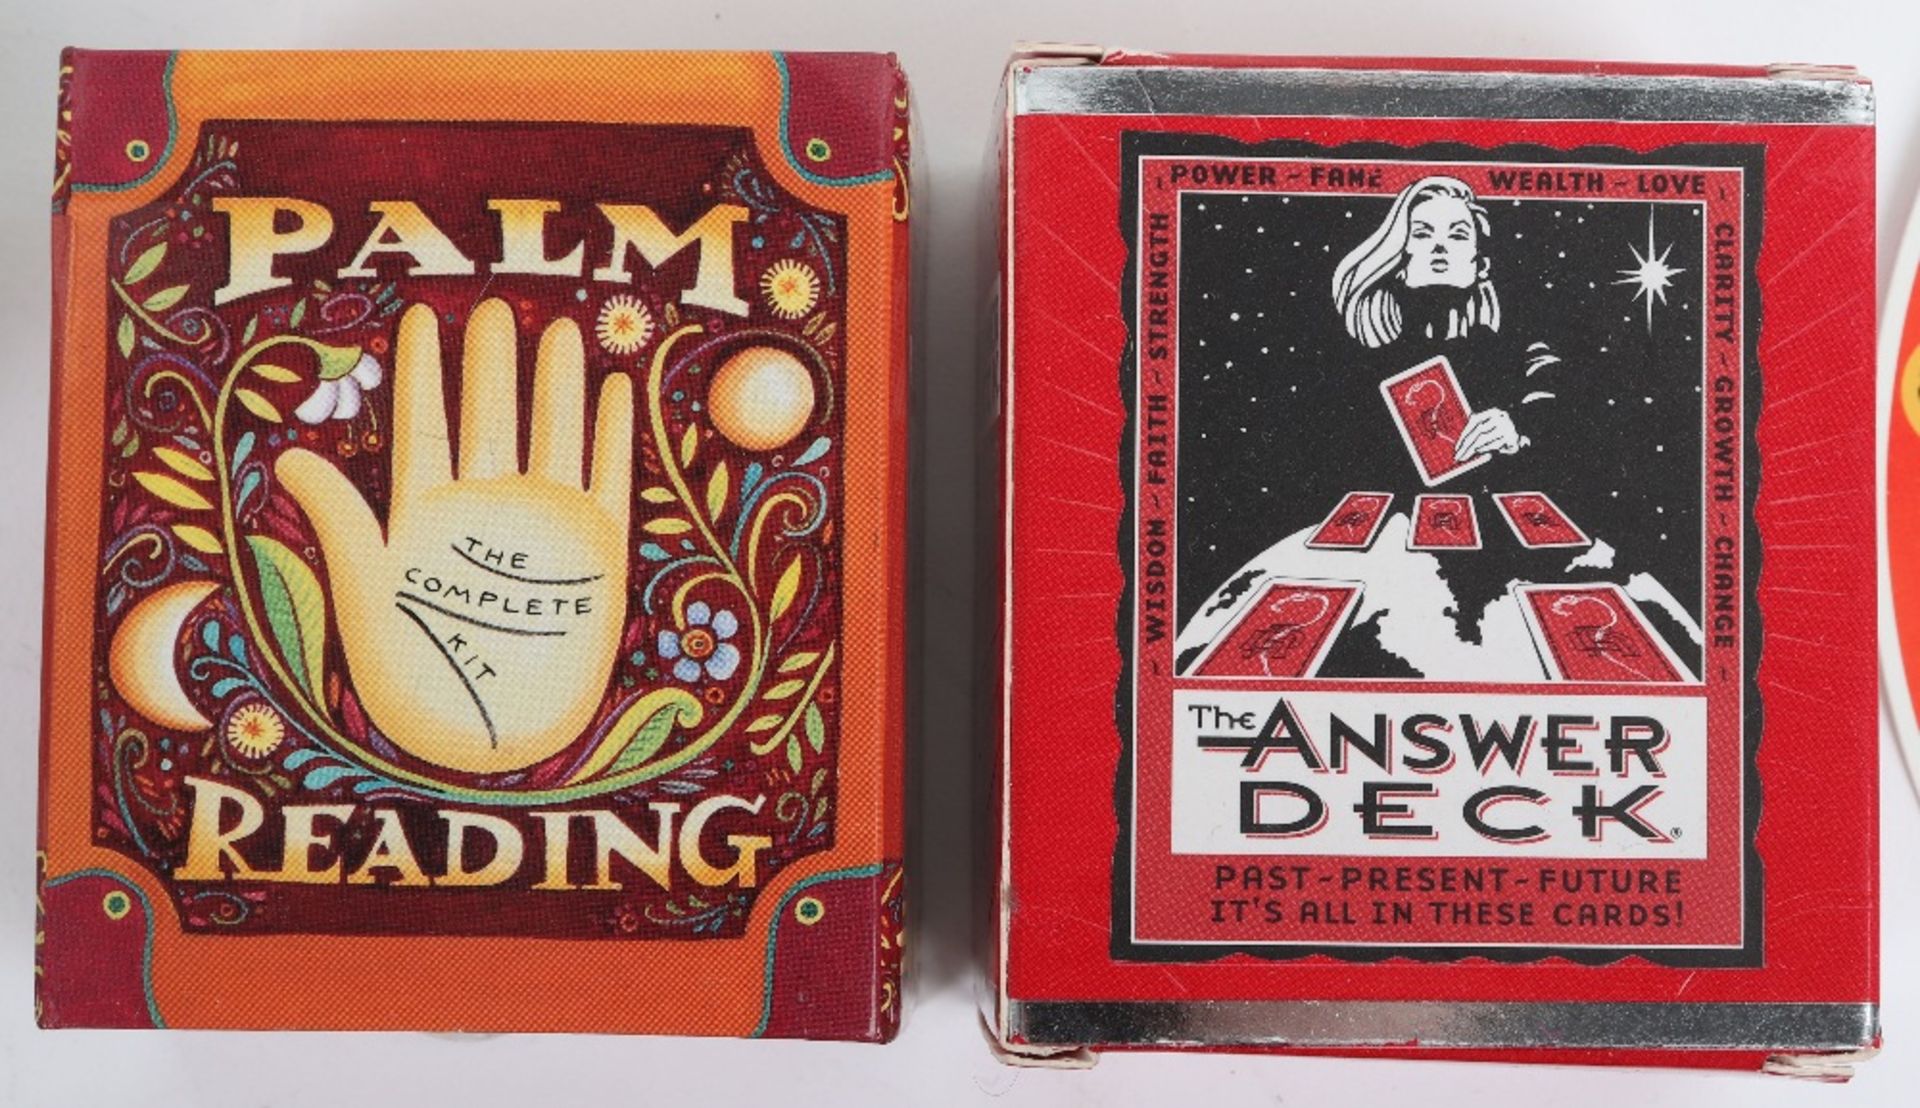 A selection of tarot cards and spiritual readings paraphernalia - Image 8 of 9